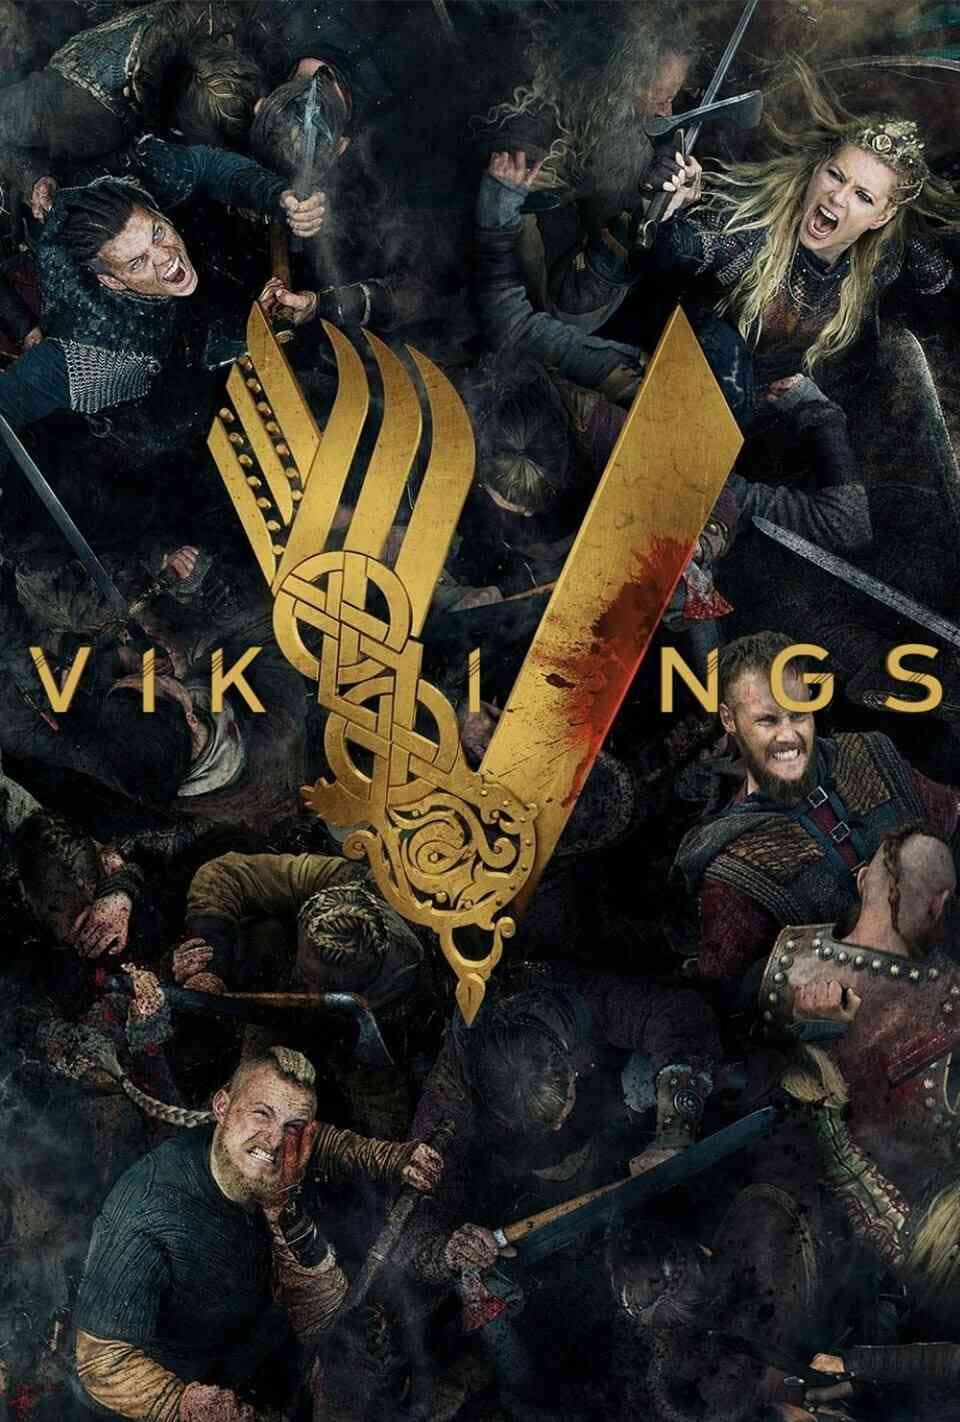 Read Vikings screenplay (poster)